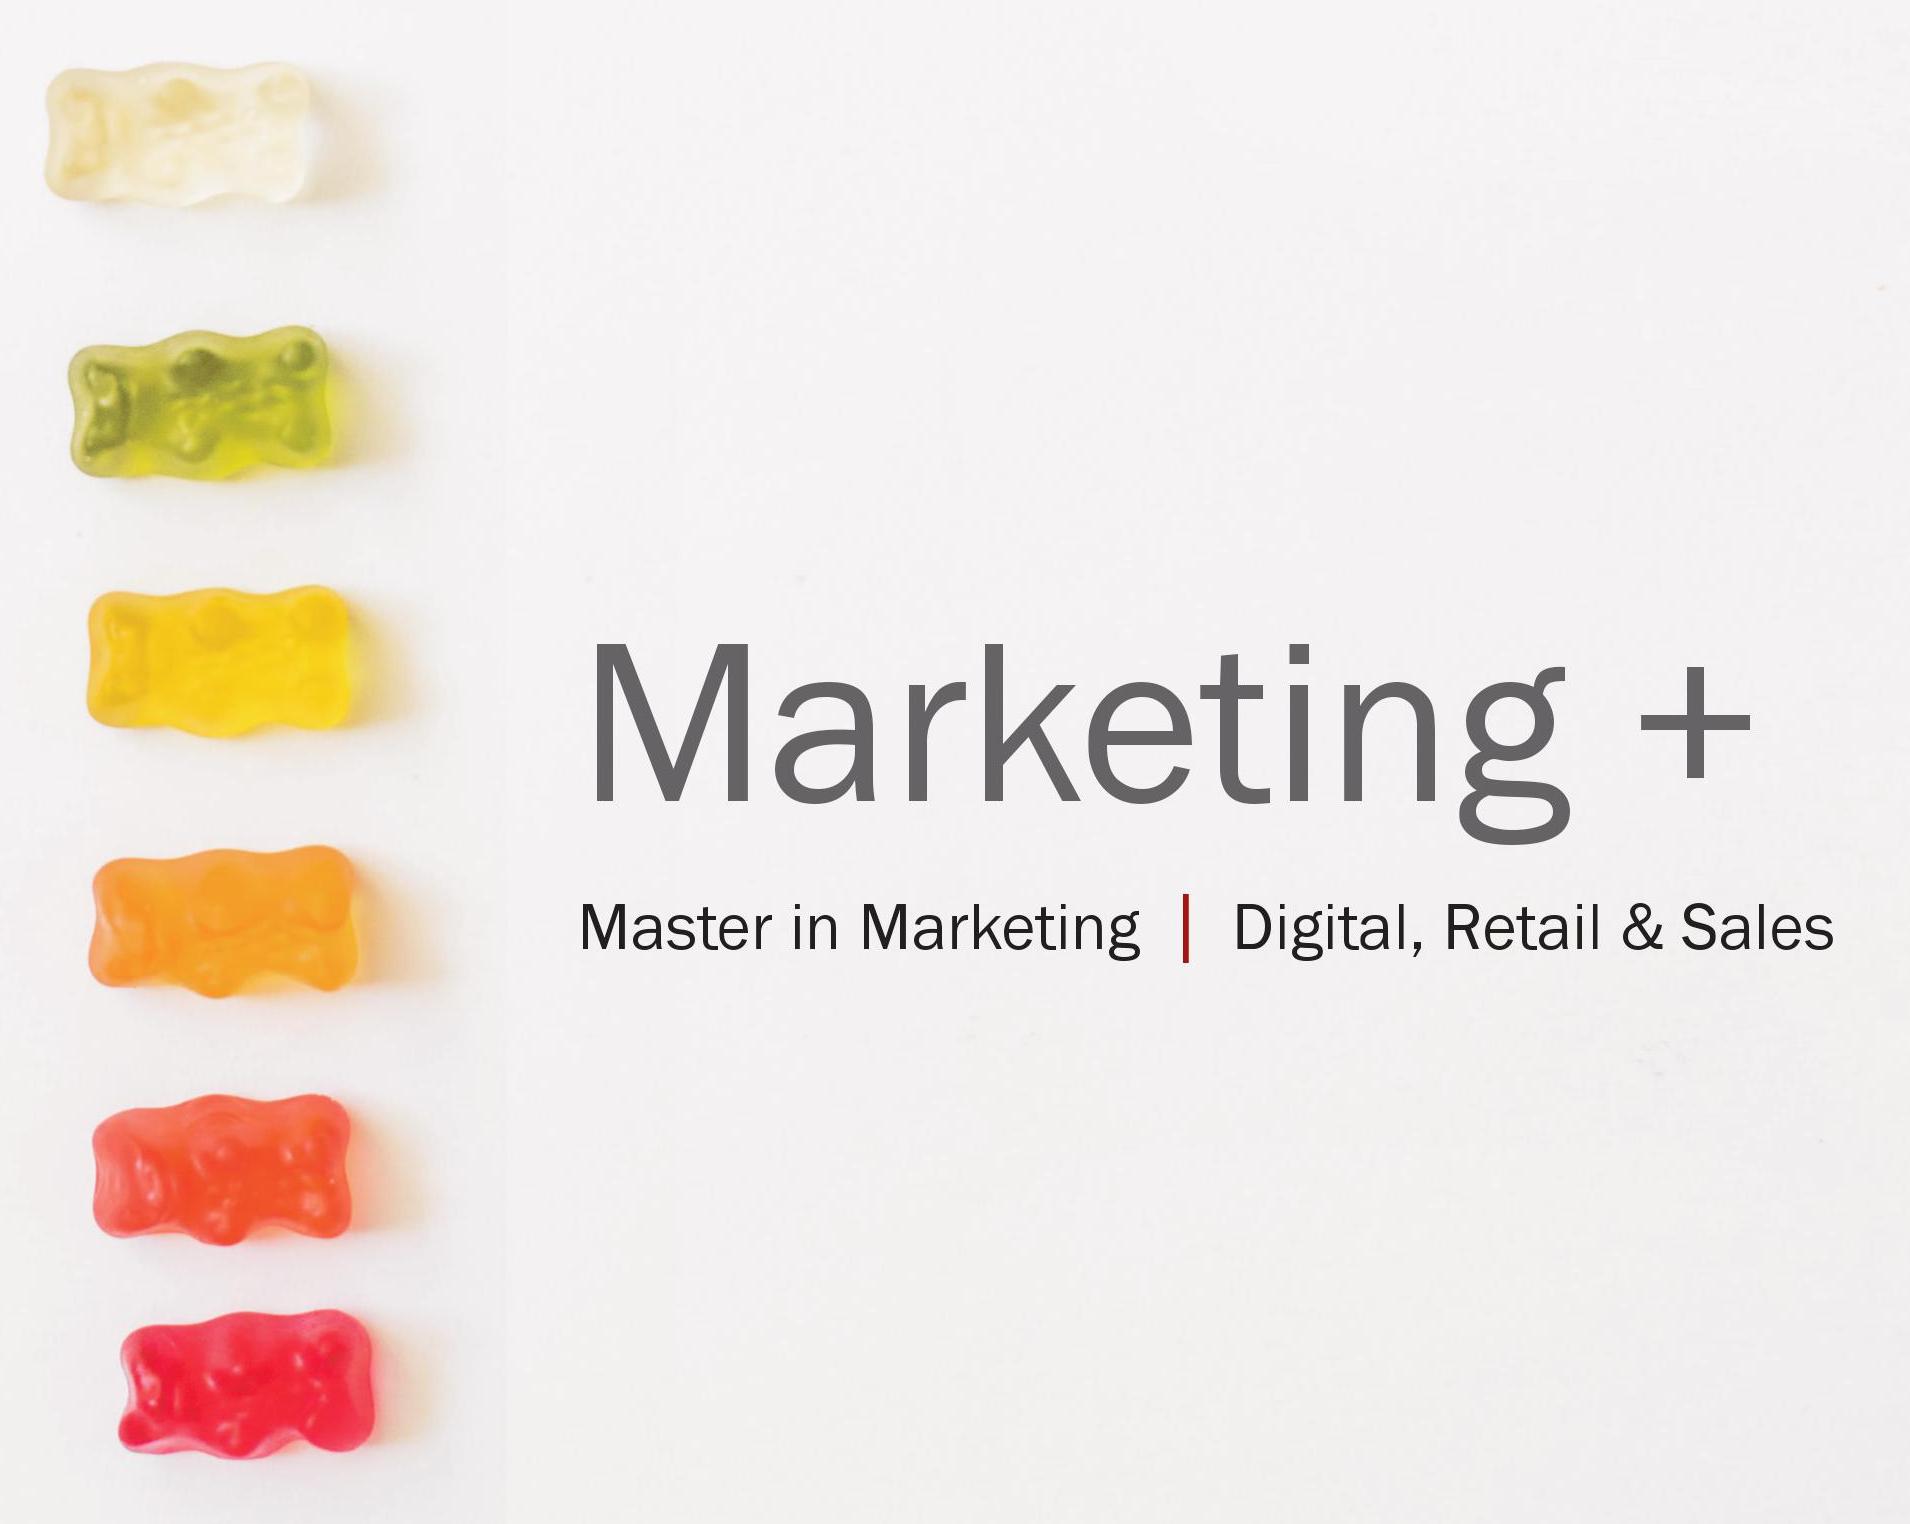 Master in Marketing+Digital, Retail & Sales